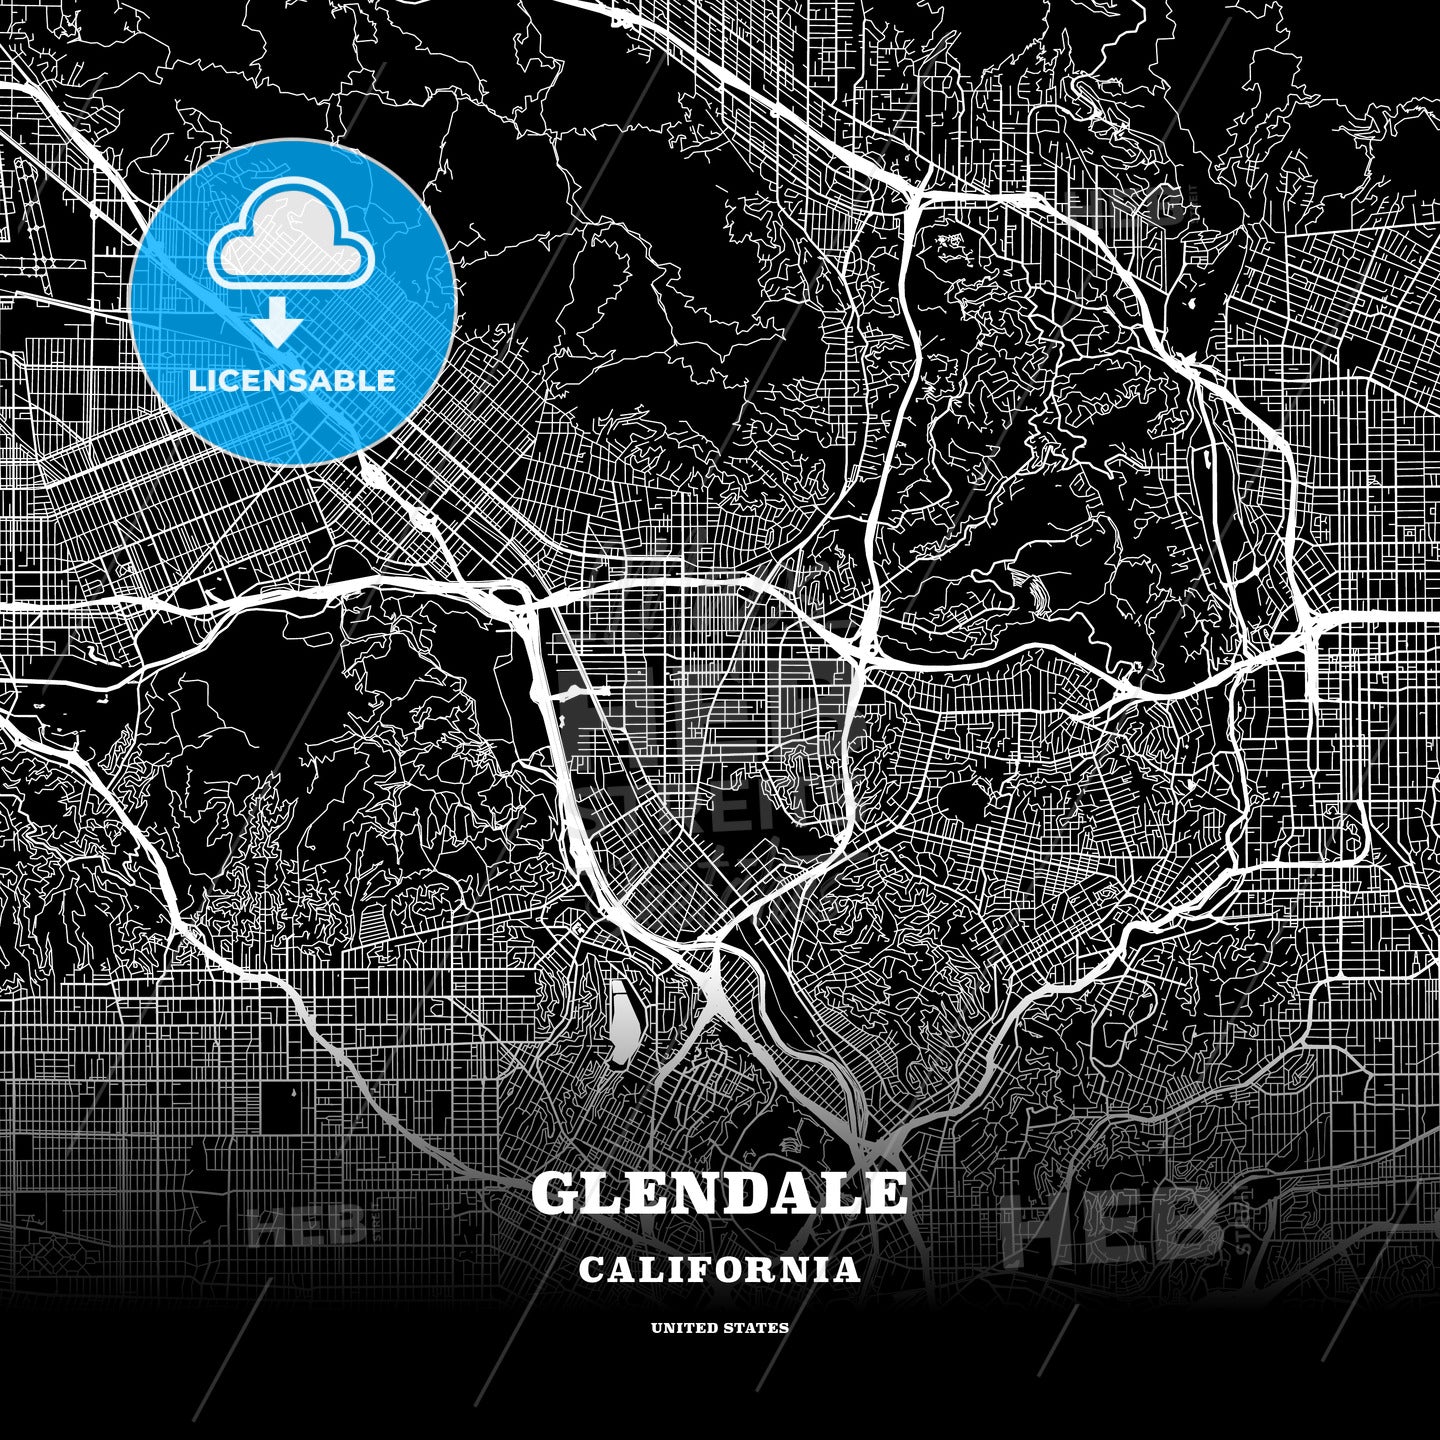 Glendale, California, USA map